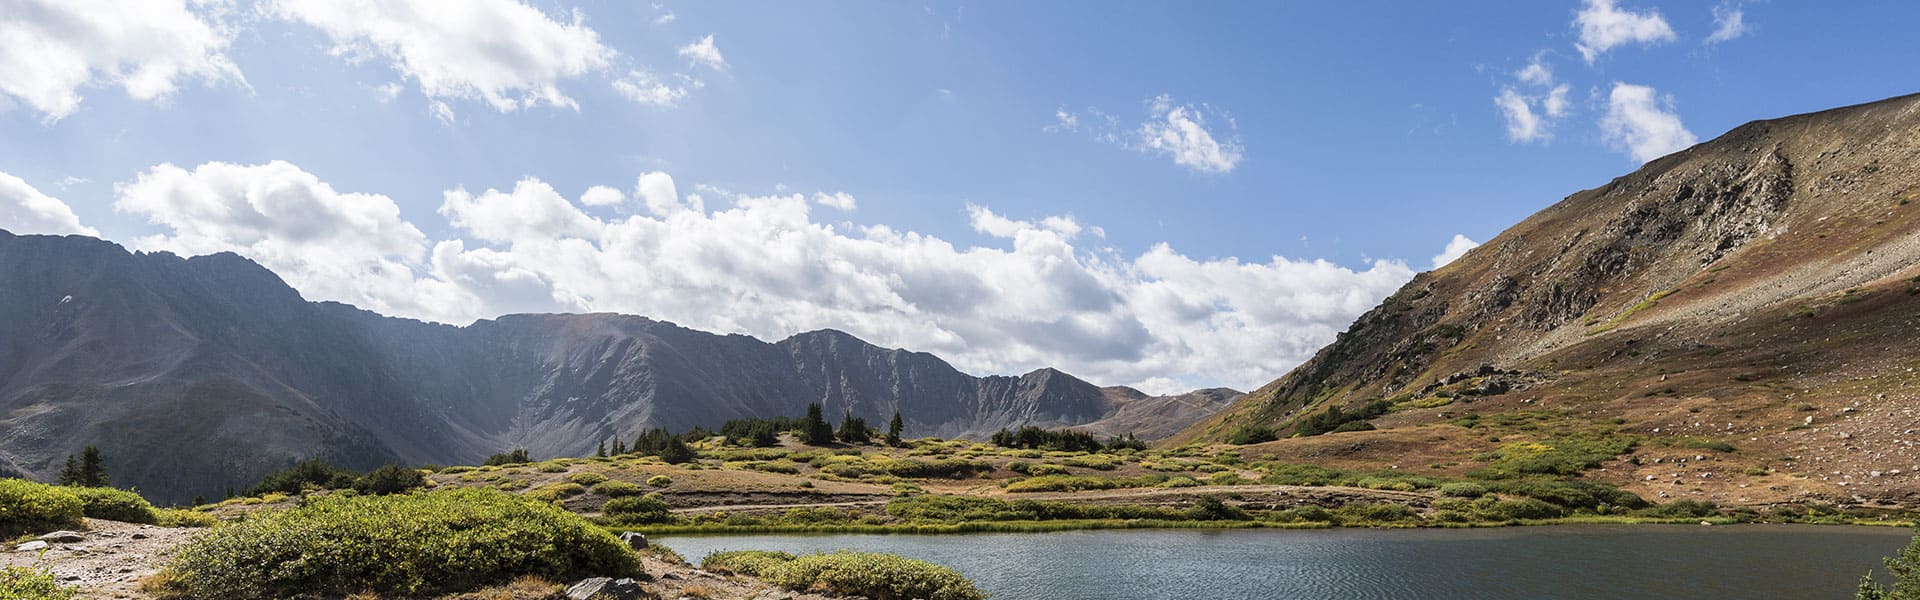 A lakeside view of a mountain range.